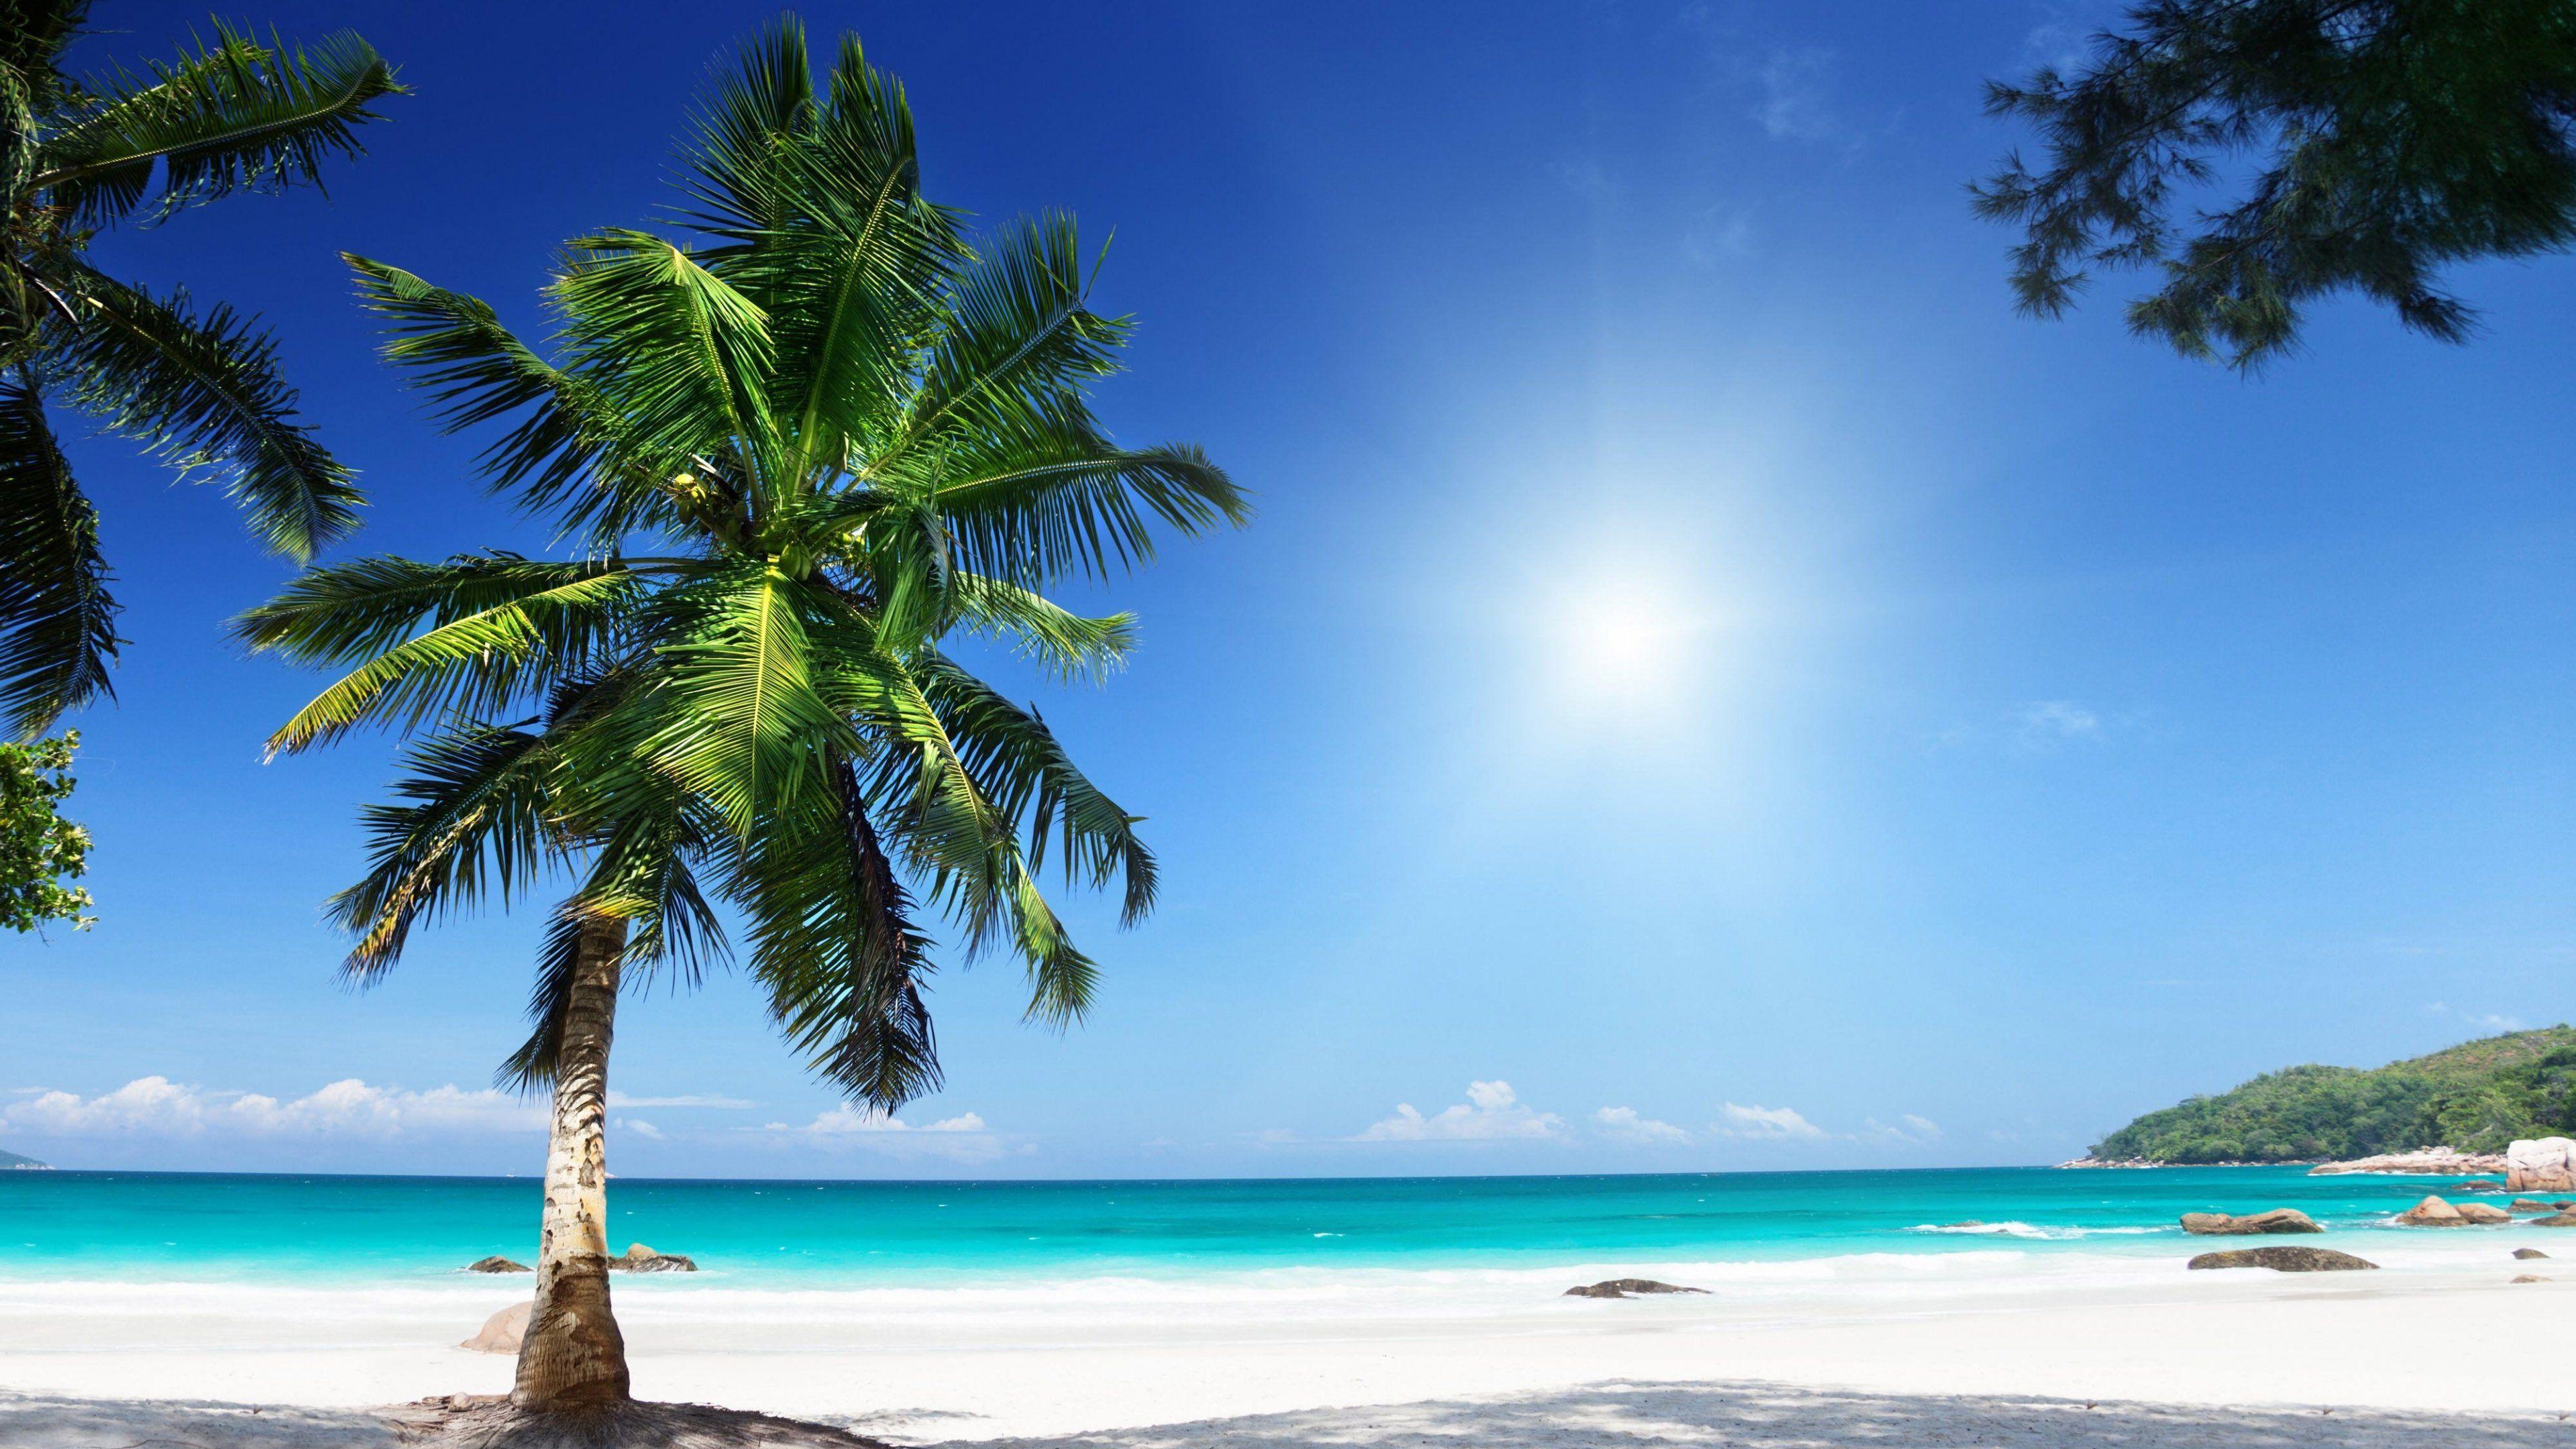 Palm Tree on Tropical Beach 4k Ultra HD Wallpapers